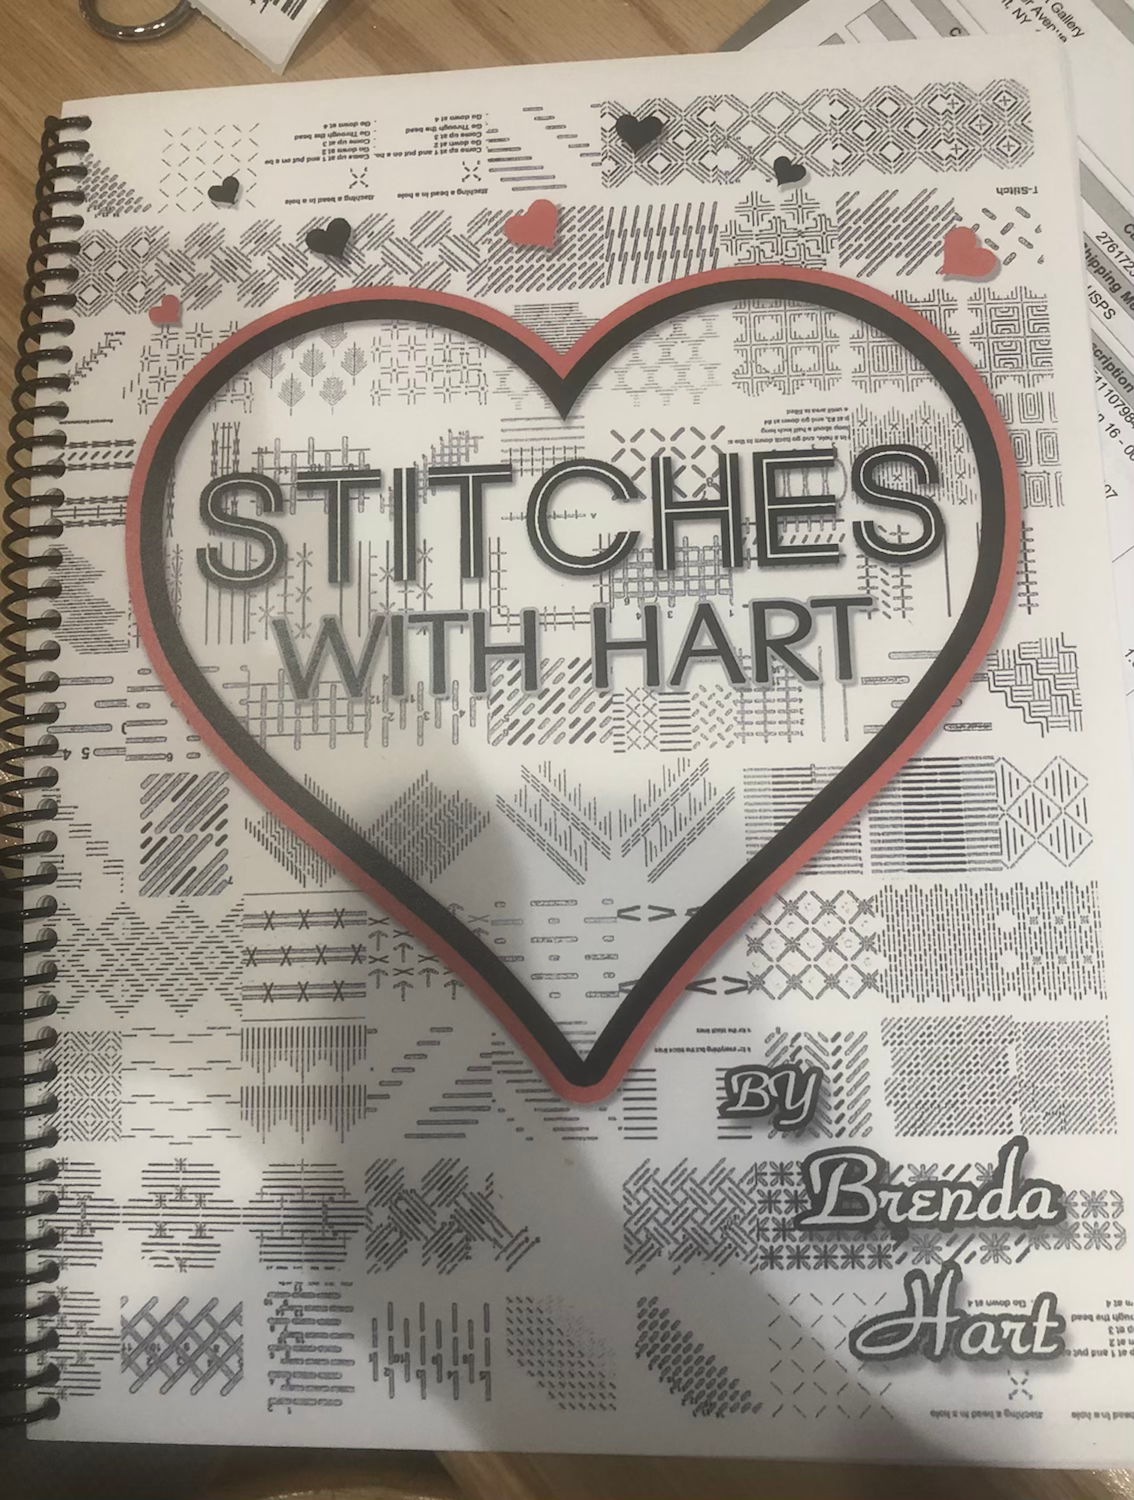 Brenda Hart Stitches with Hart